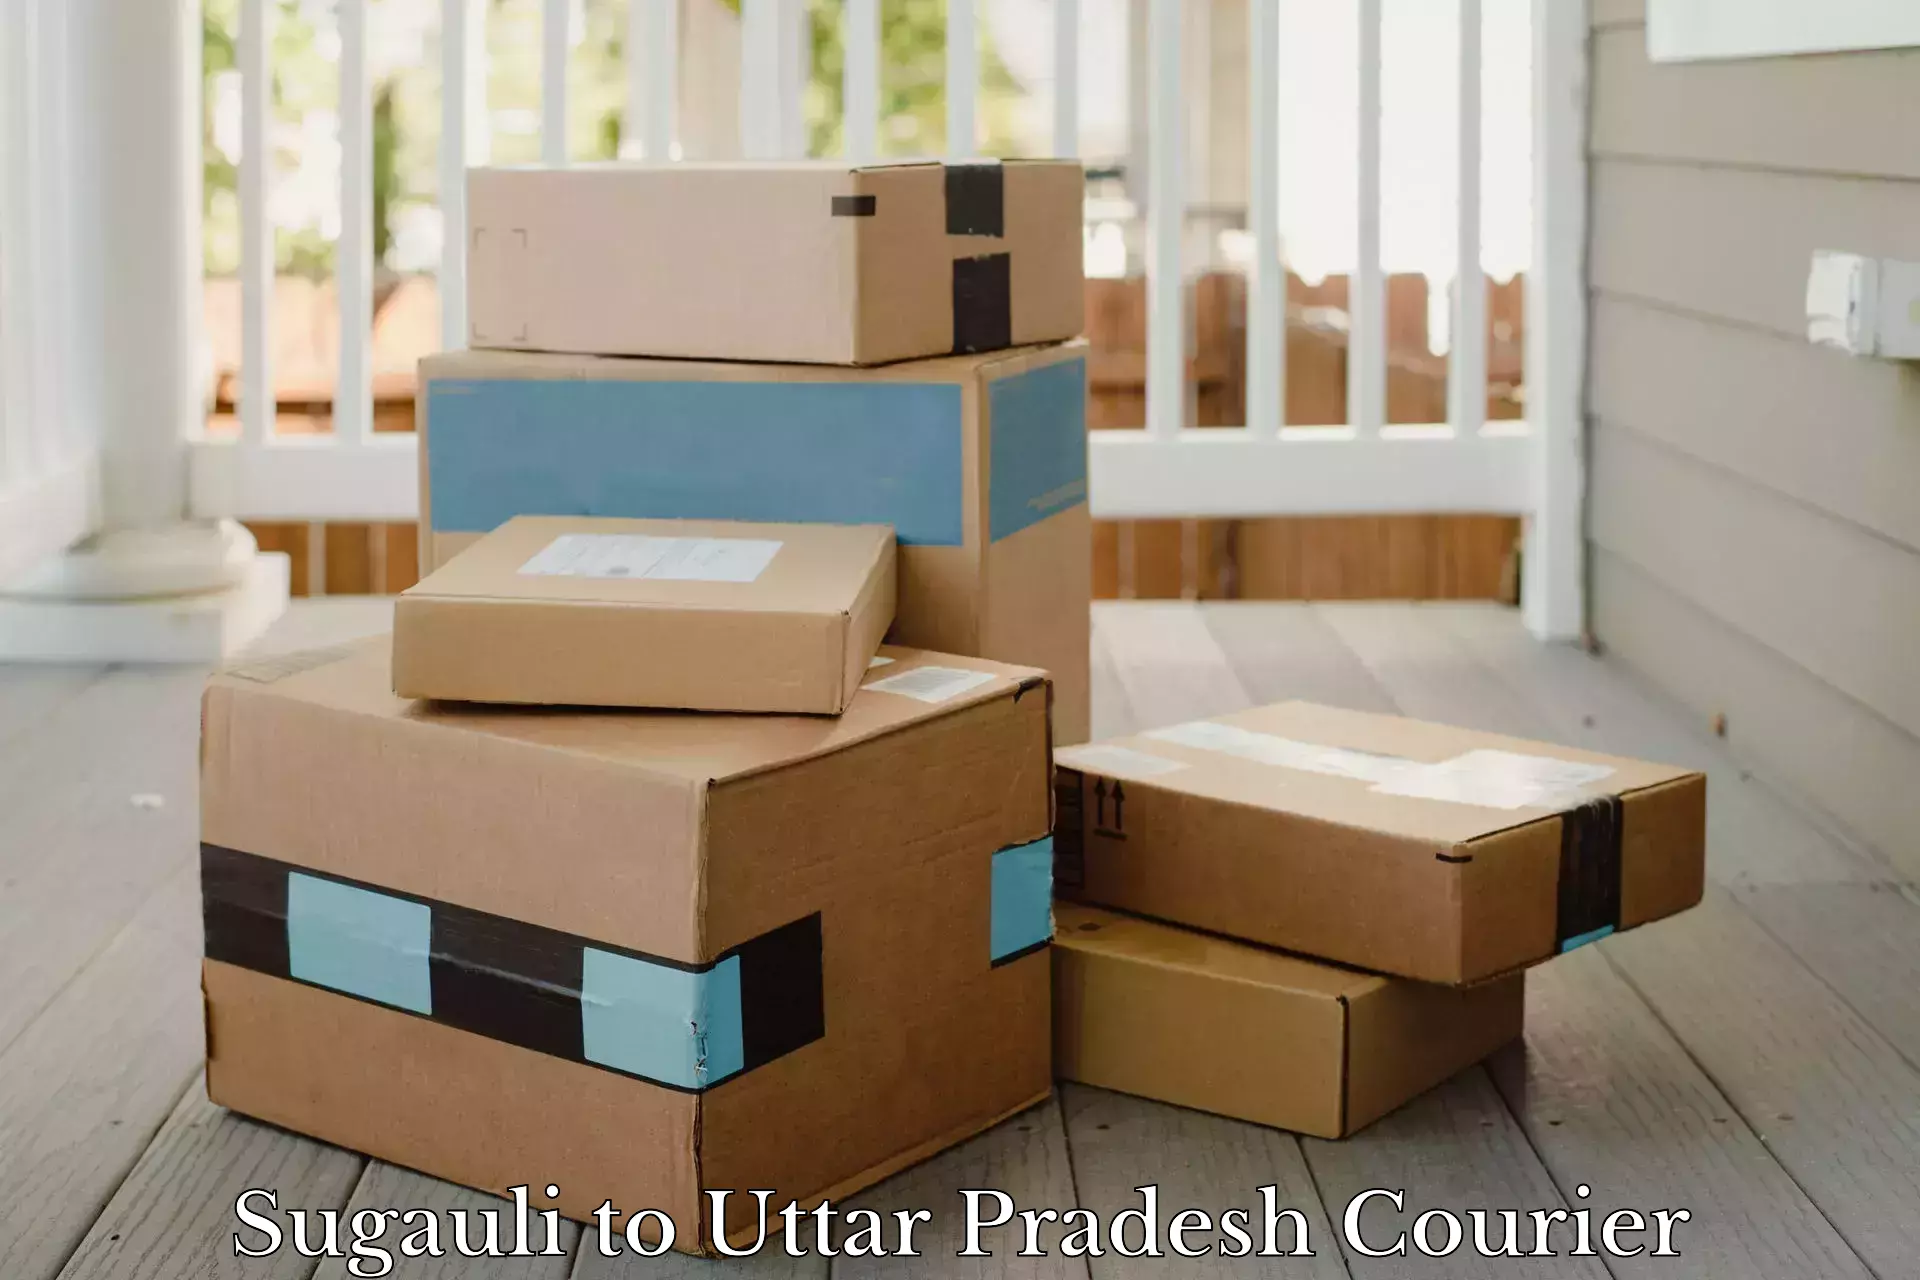 Residential courier service in Sugauli to Uttar Pradesh